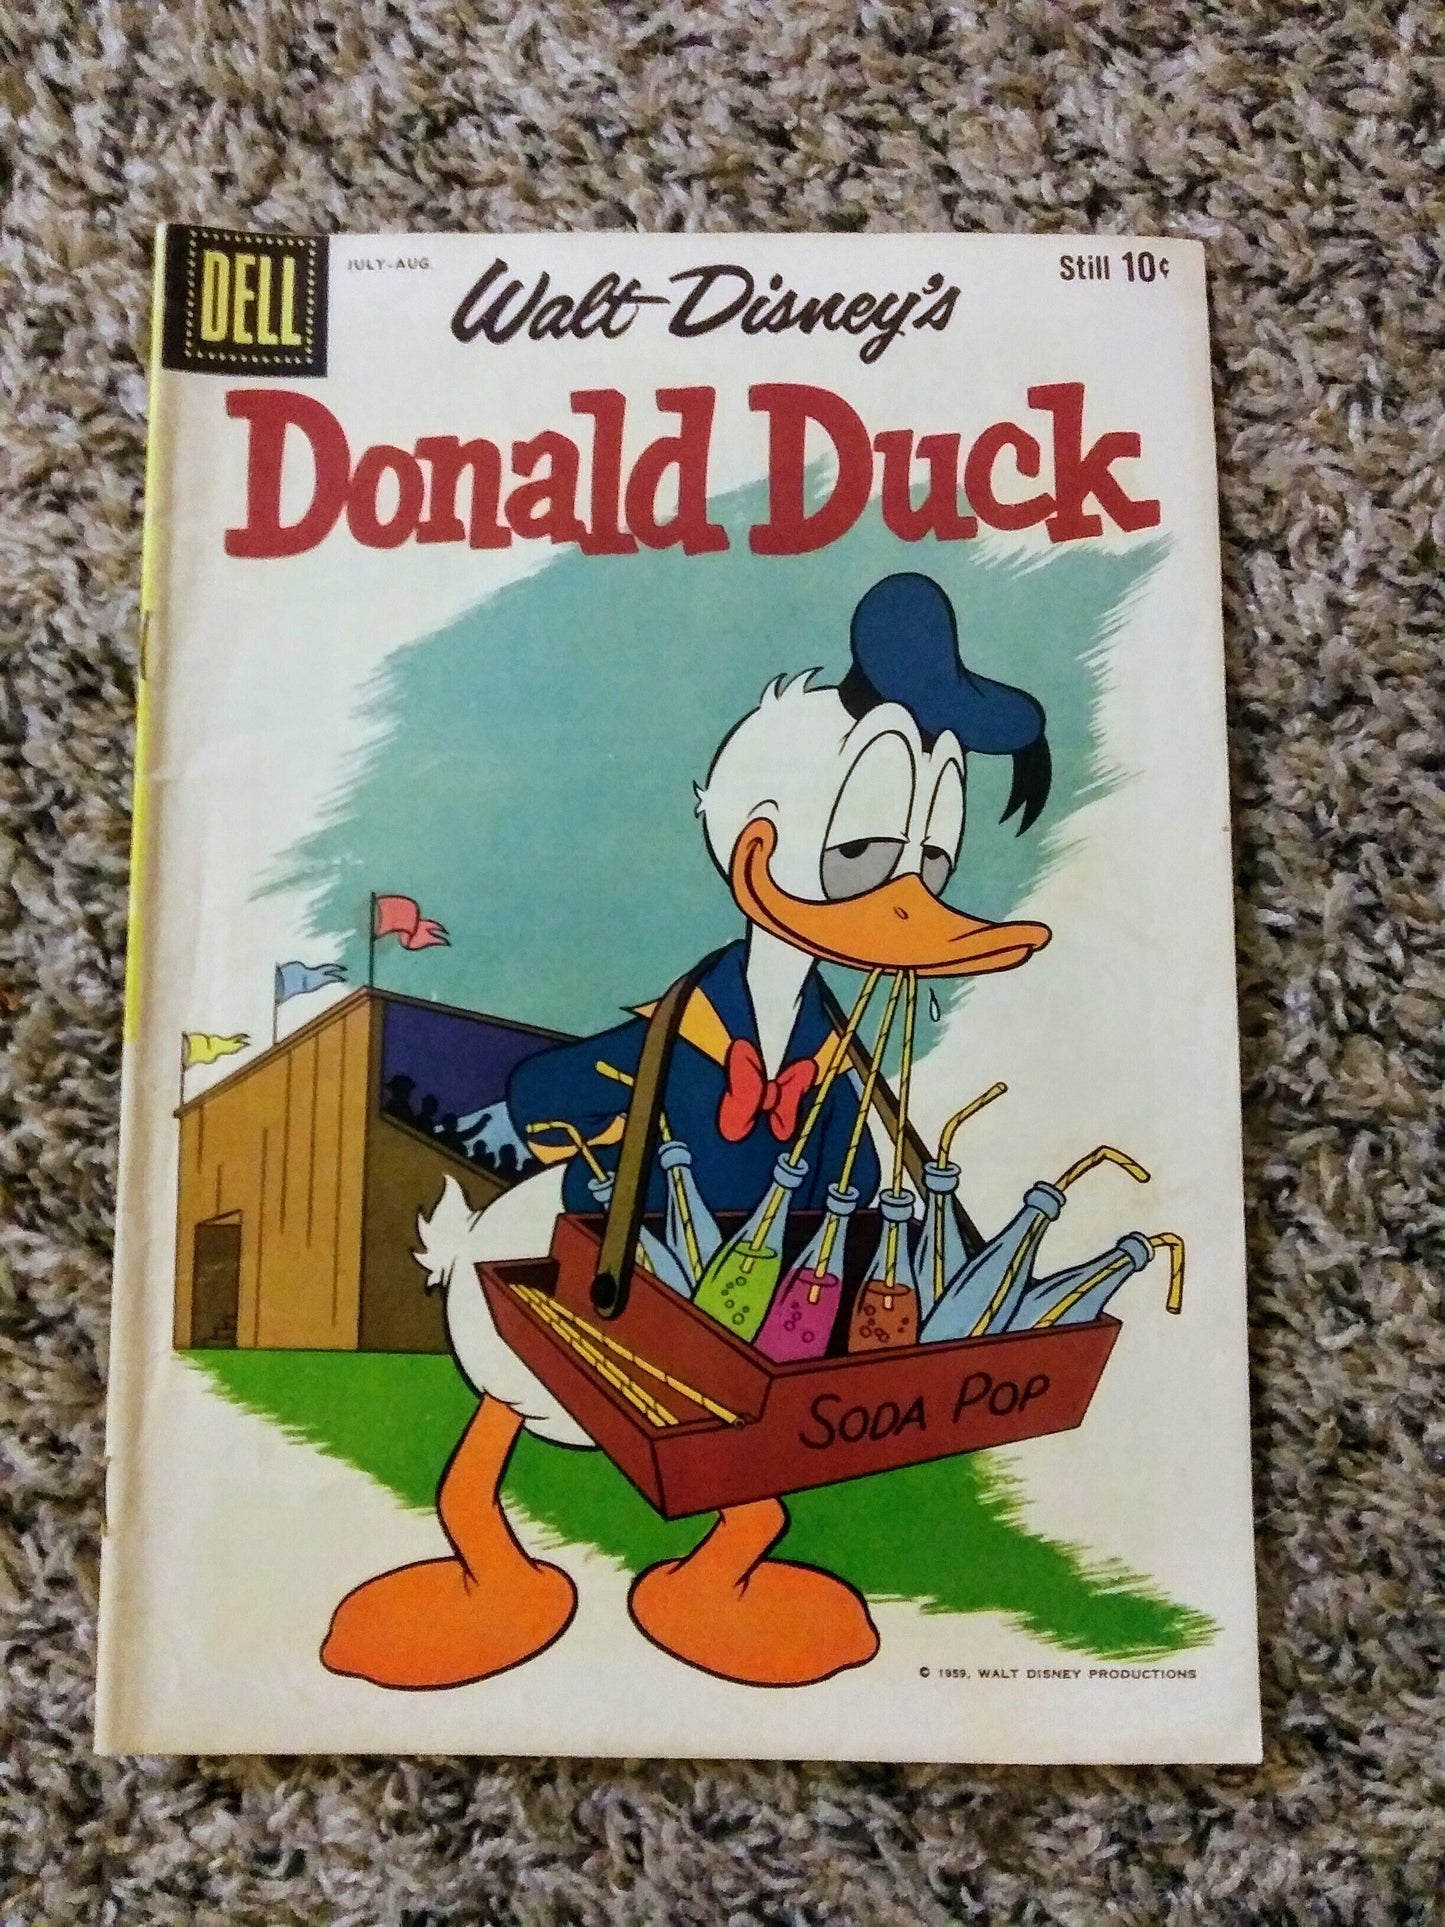 Walt Disney's Donald Duck #66, Dell Comics (July-Aug. 1959)